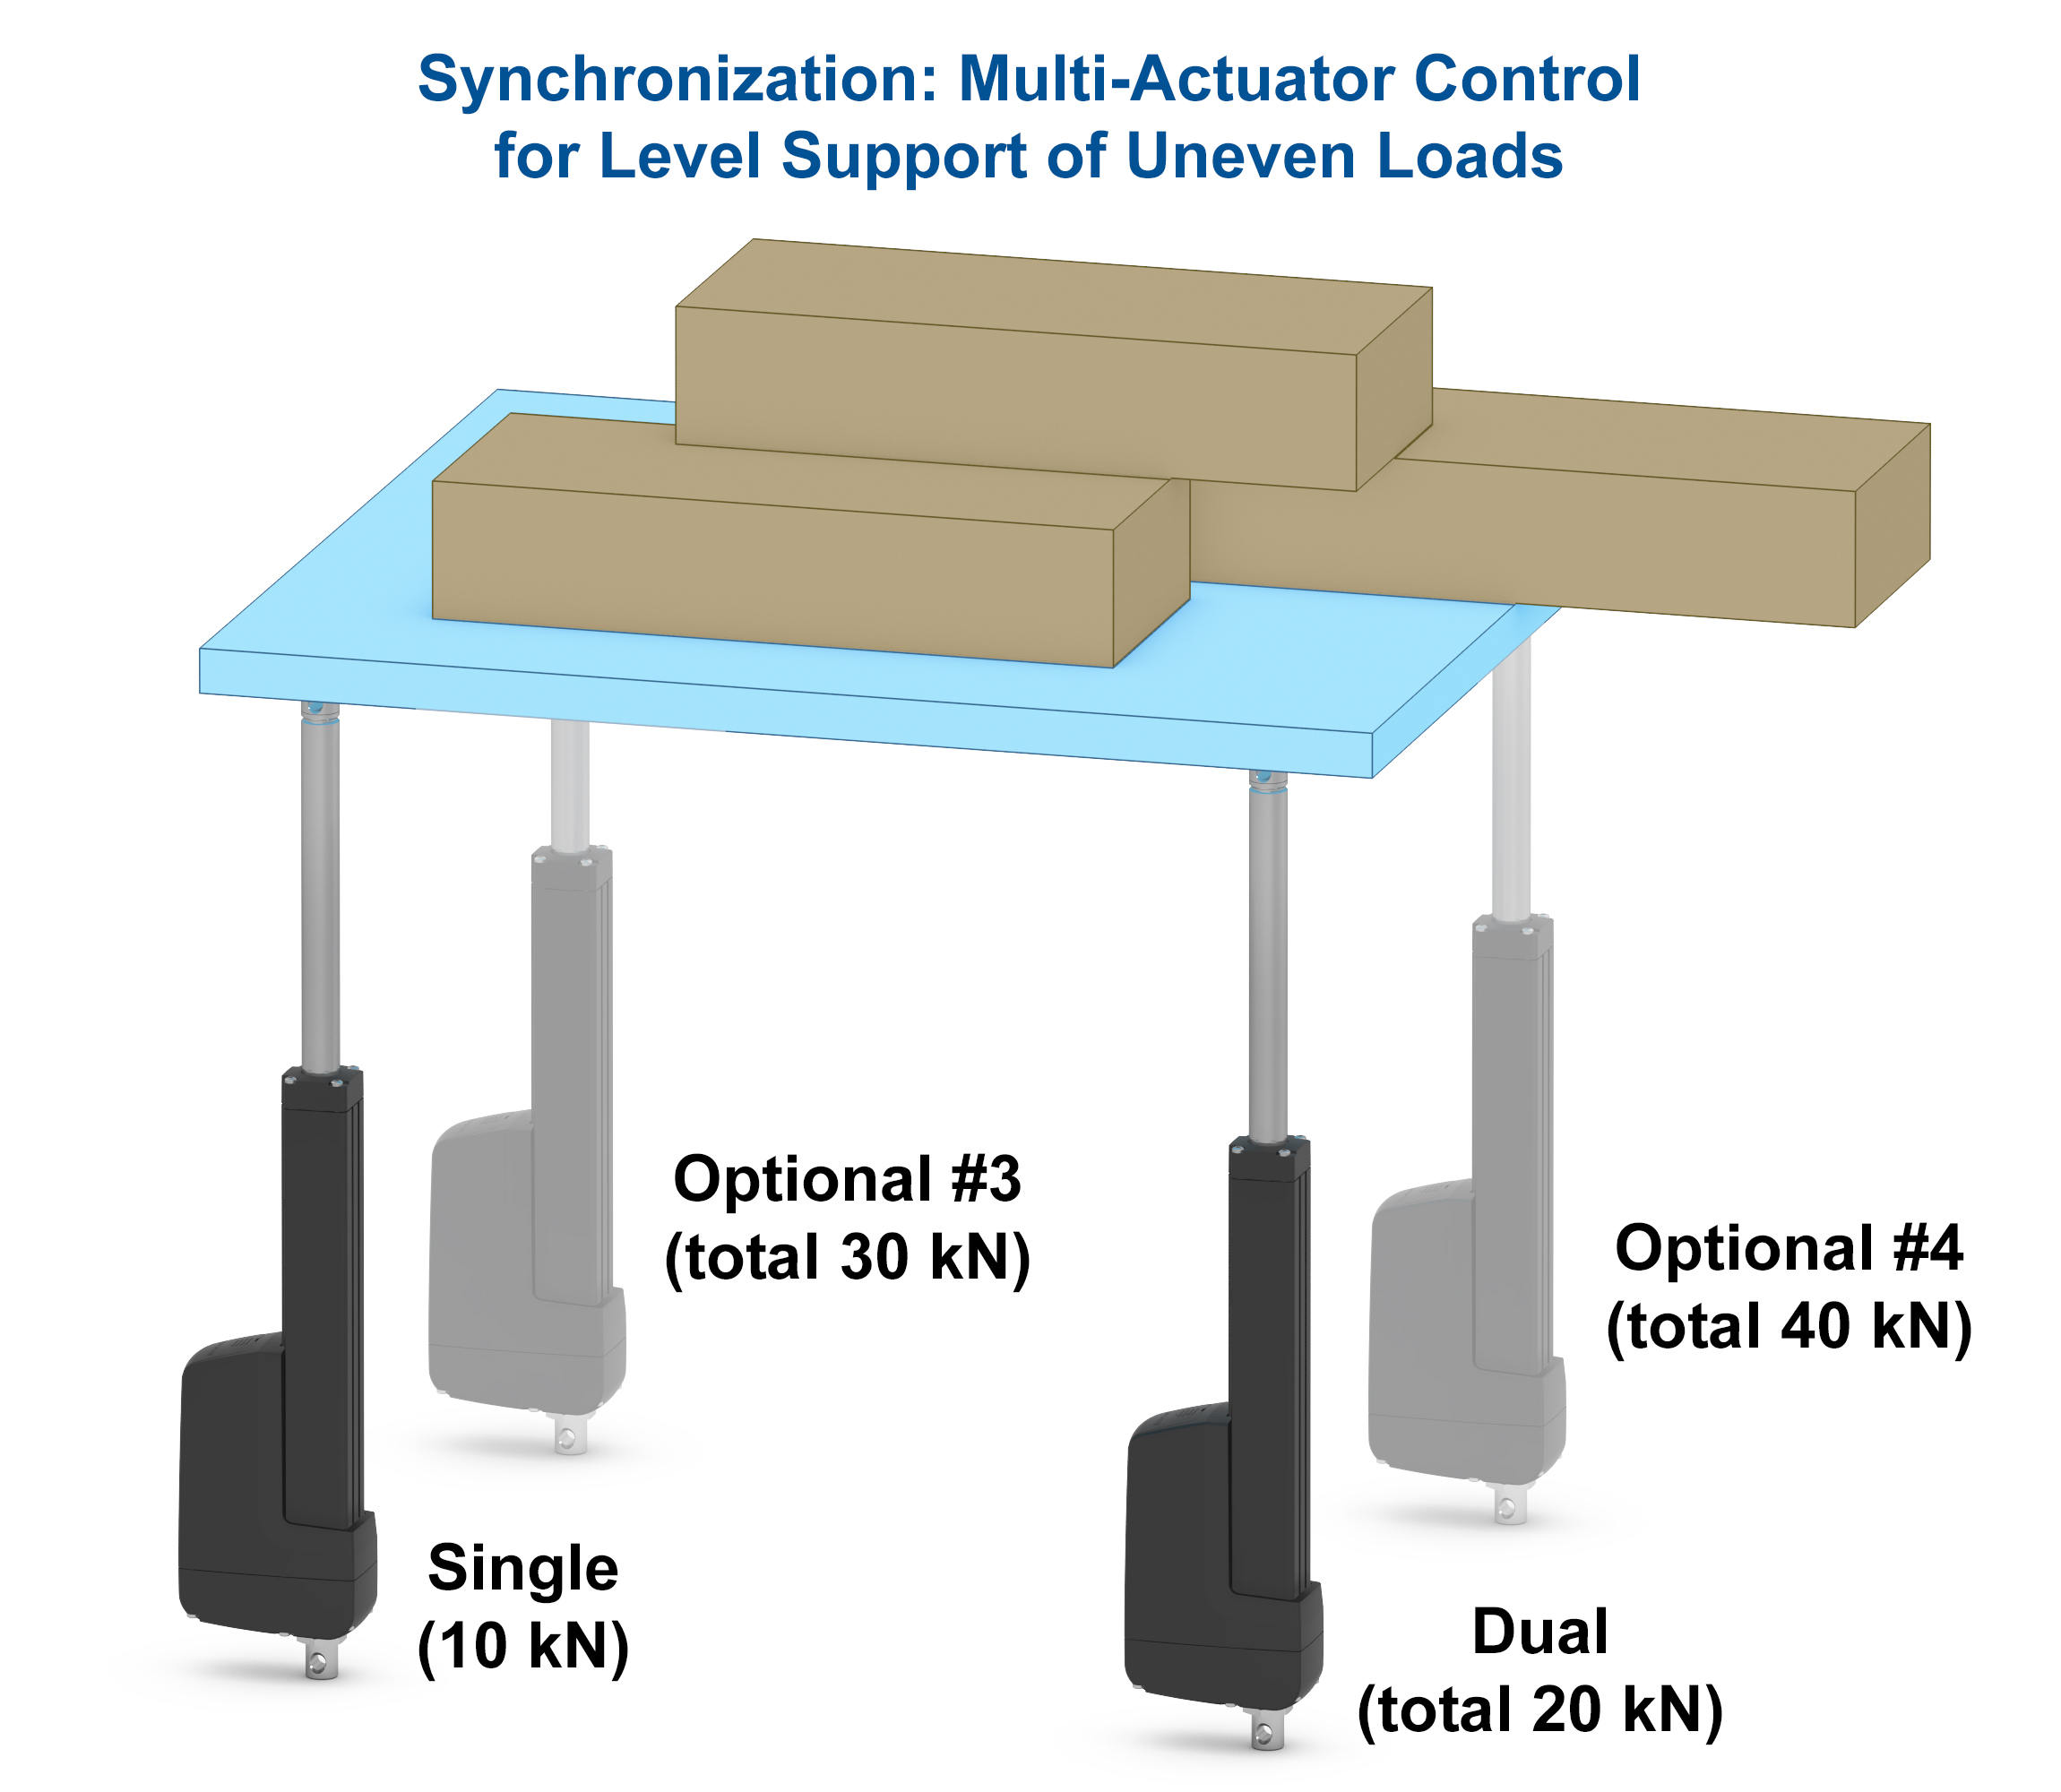 Multi-actuator synchronization